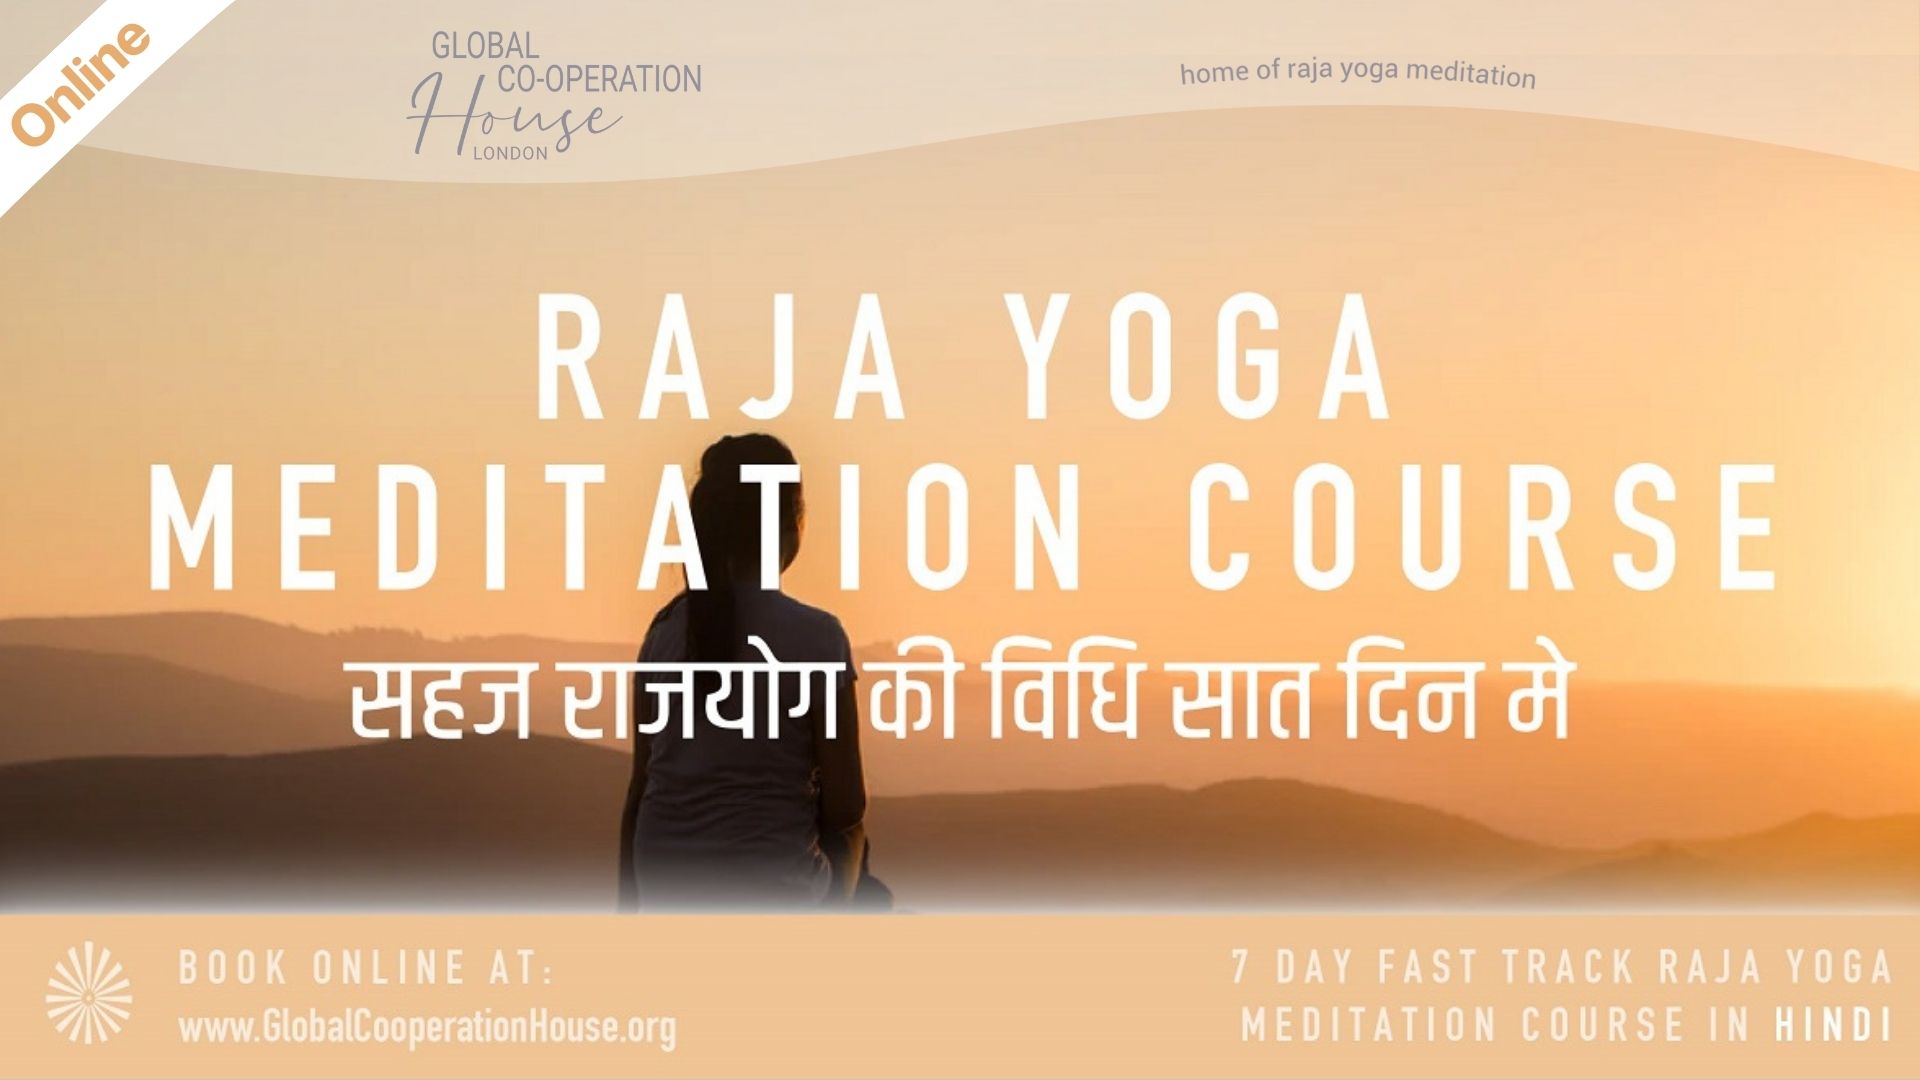 सहज राजयोग की विधि - सात दिन मे : Raja Yoga 7-Day Fast Track Meditation Course in HINDI